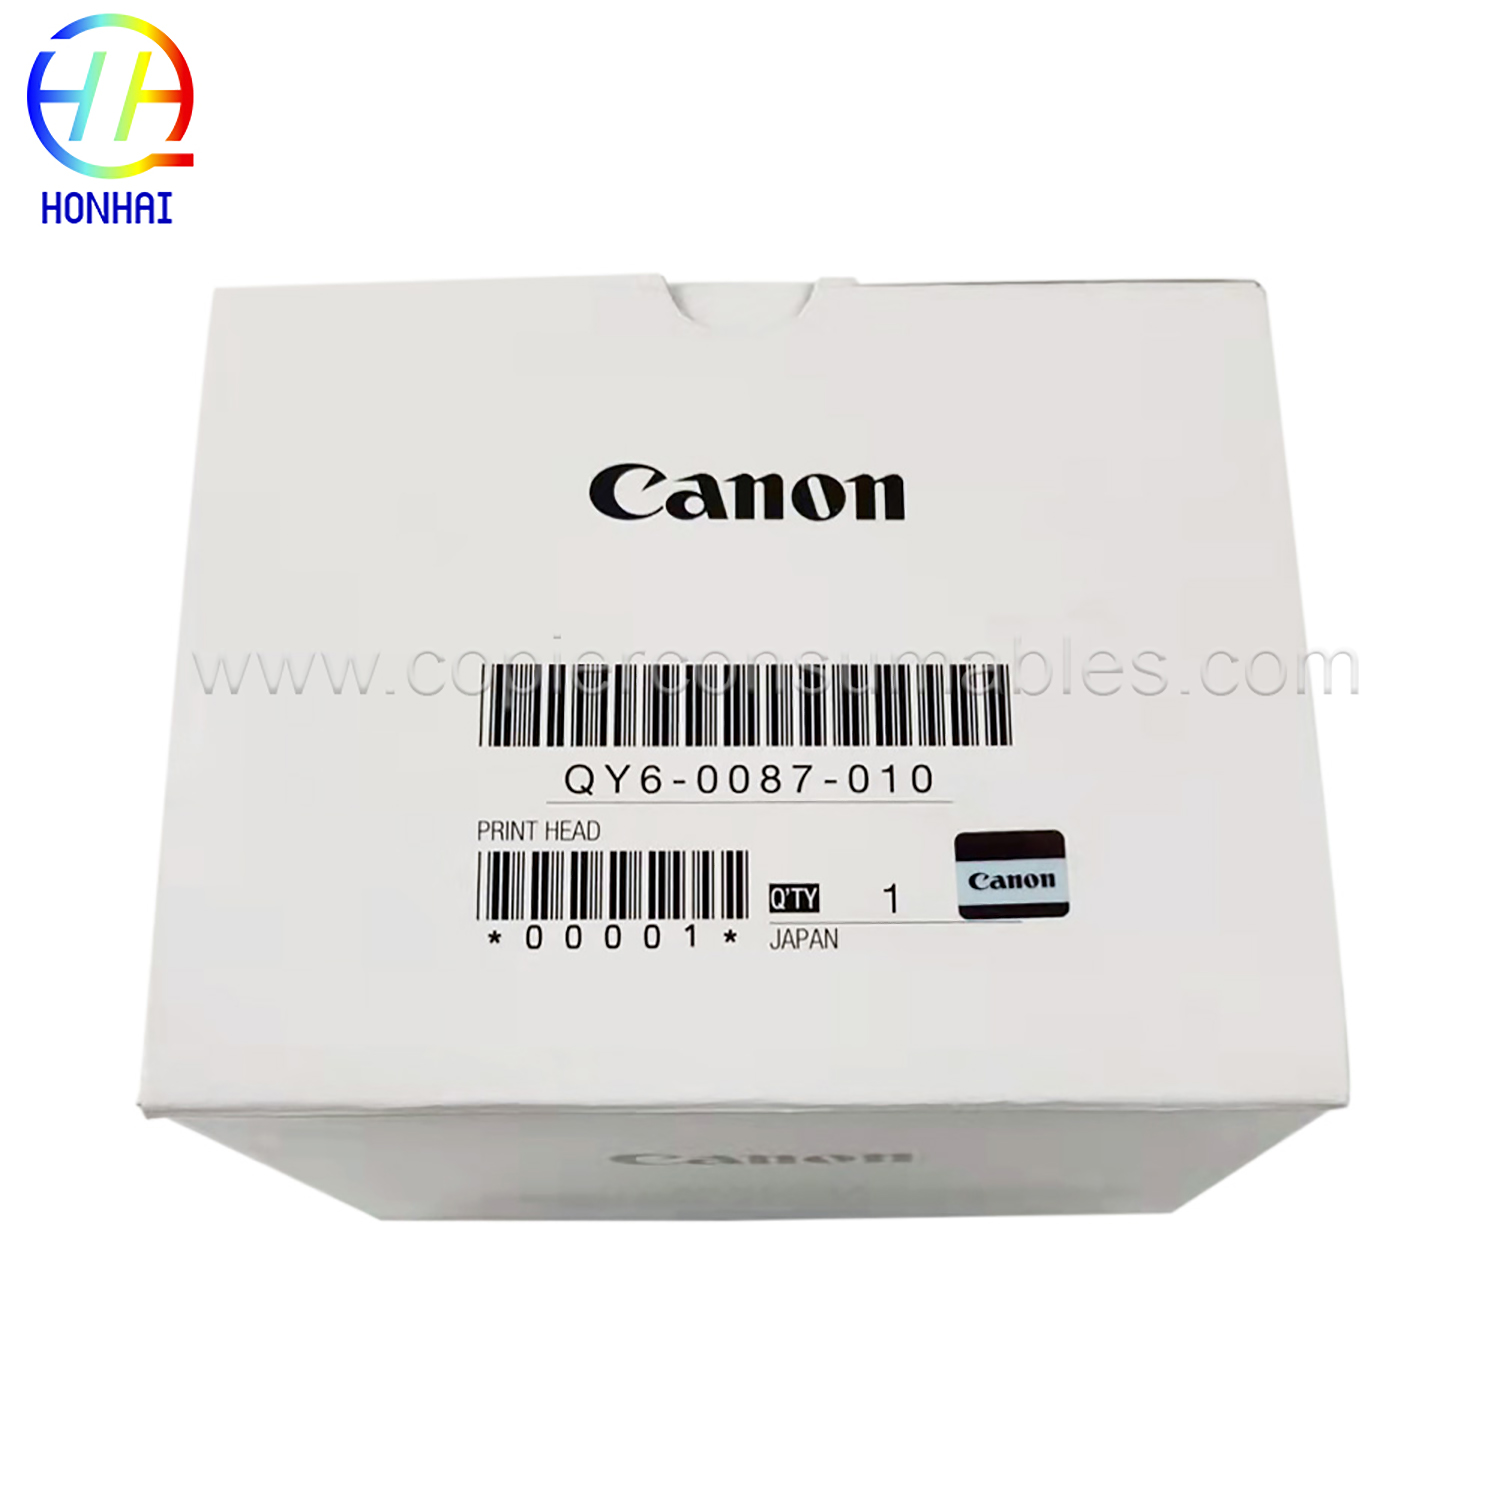 Tête d'impression pour CANON QY6-0087-000 Maxify ib4020 mb2020 mb2320 mb5020 (1) Suivant